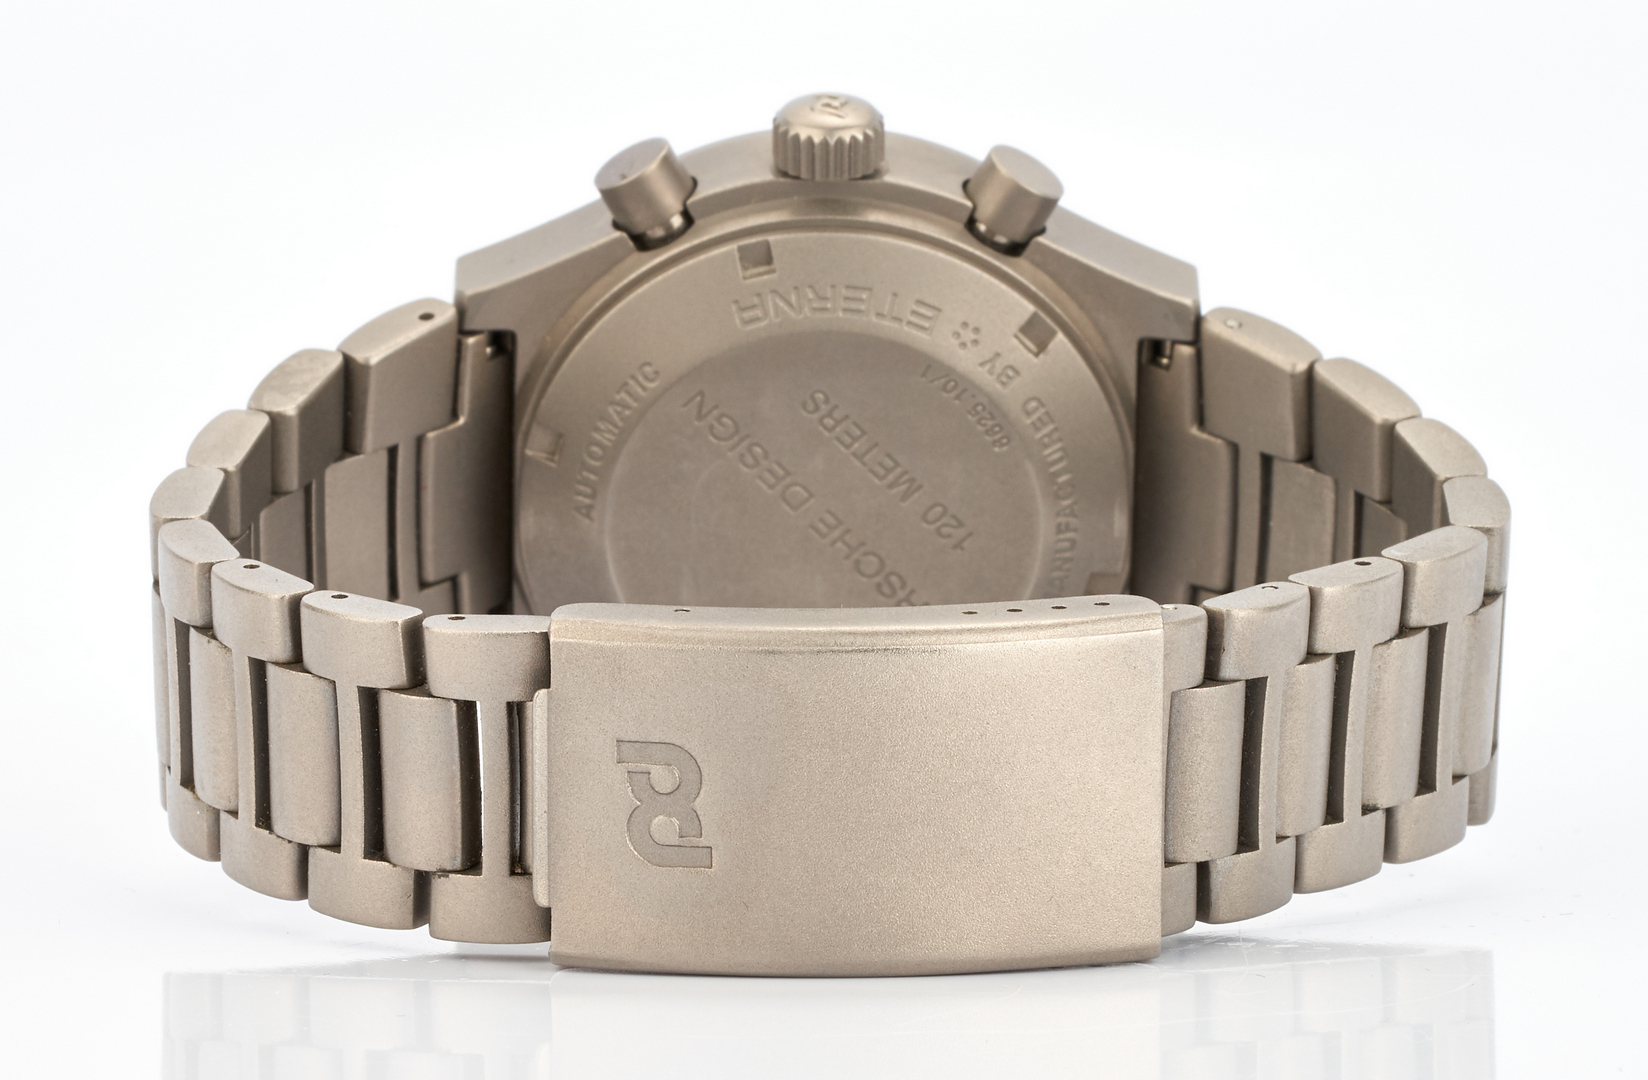 Lot 715: Porsche Design by Eterna Men's Titanium Automatic Watch